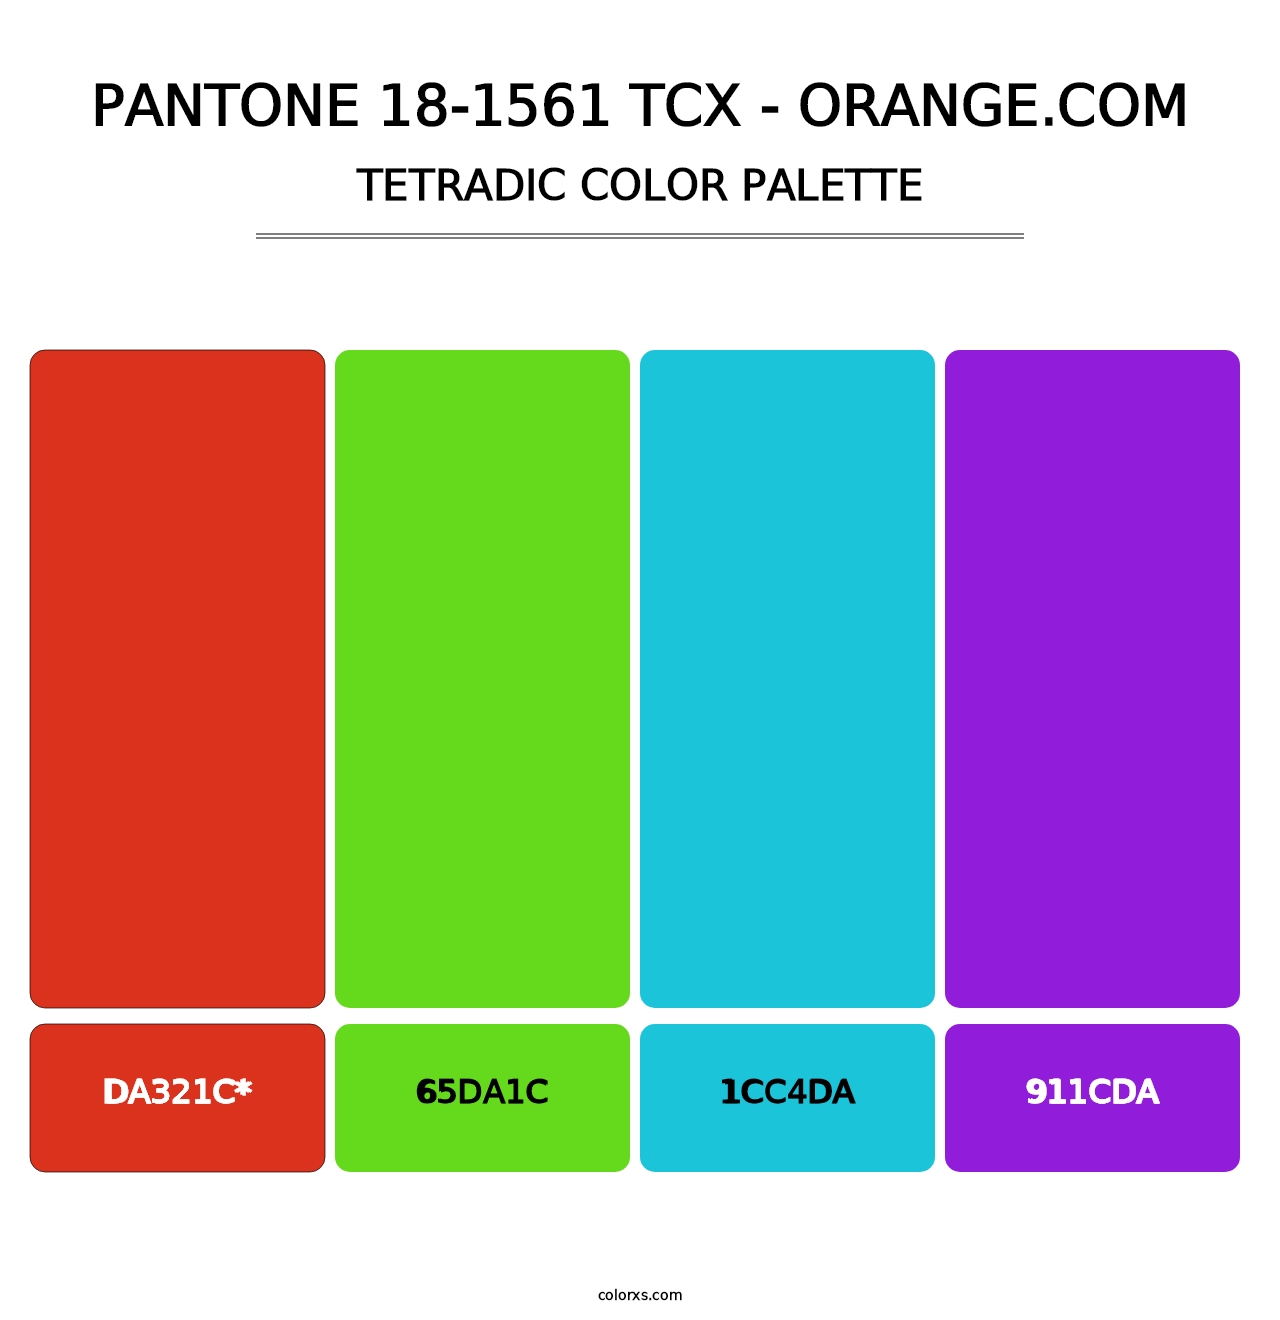 PANTONE 18-1561 TCX - Orange.com - Tetradic Color Palette